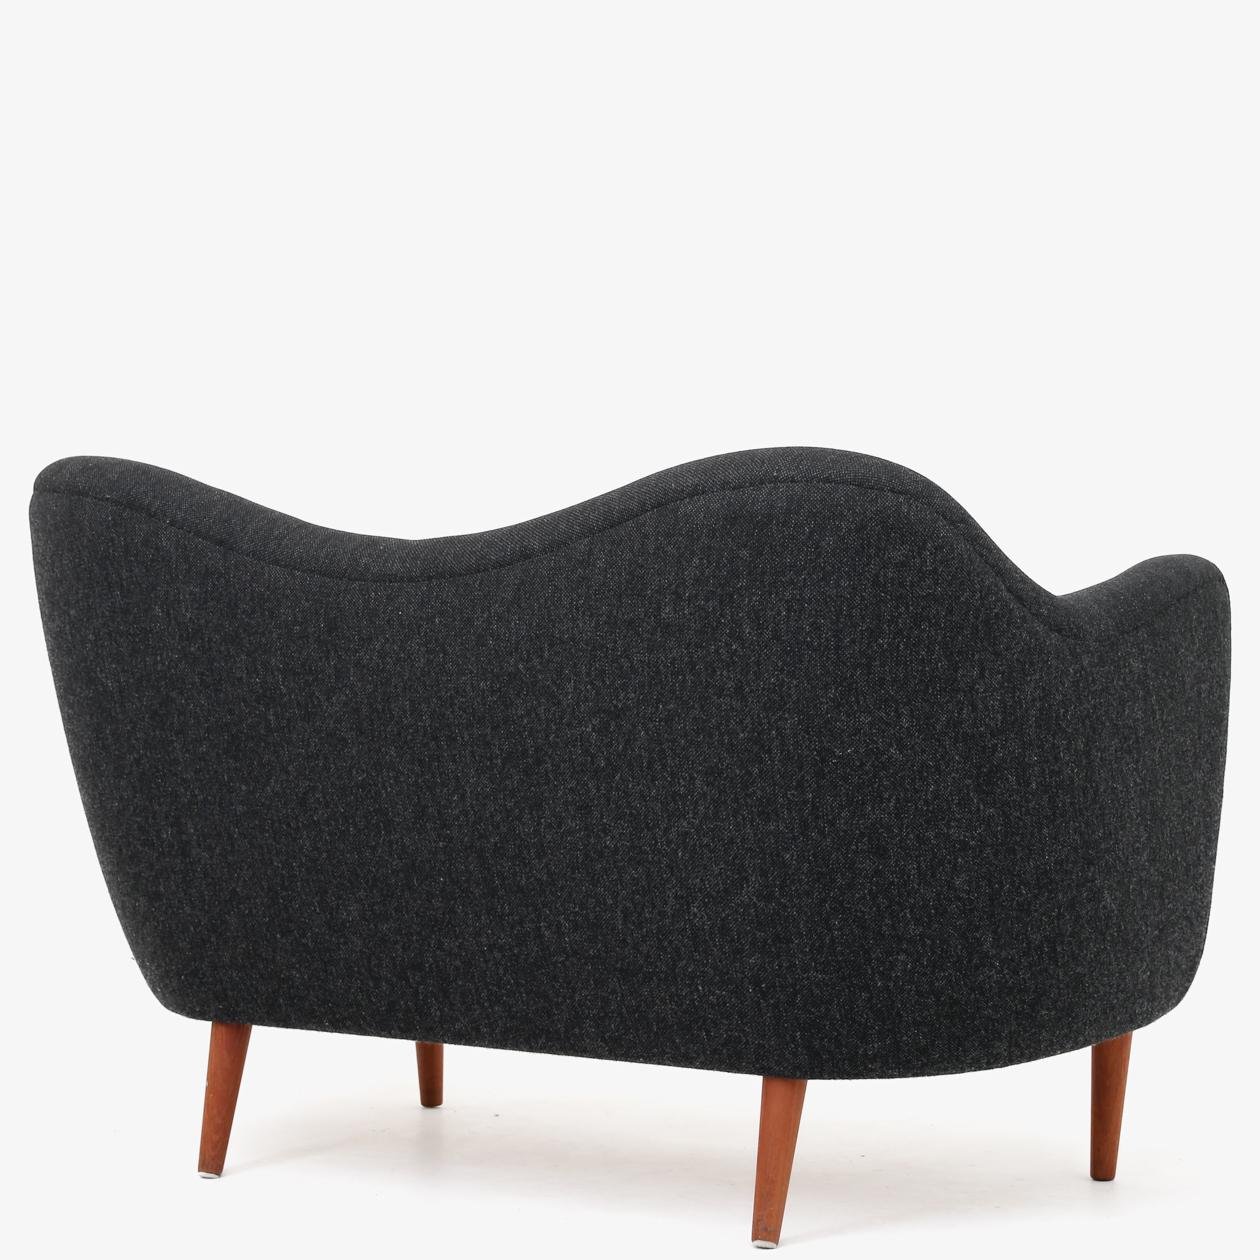 FJ 4600 - Organic sofa upholstered in Hallingdal 65 wool (colour 180) with legs in teak. Finn Juhl / One collection